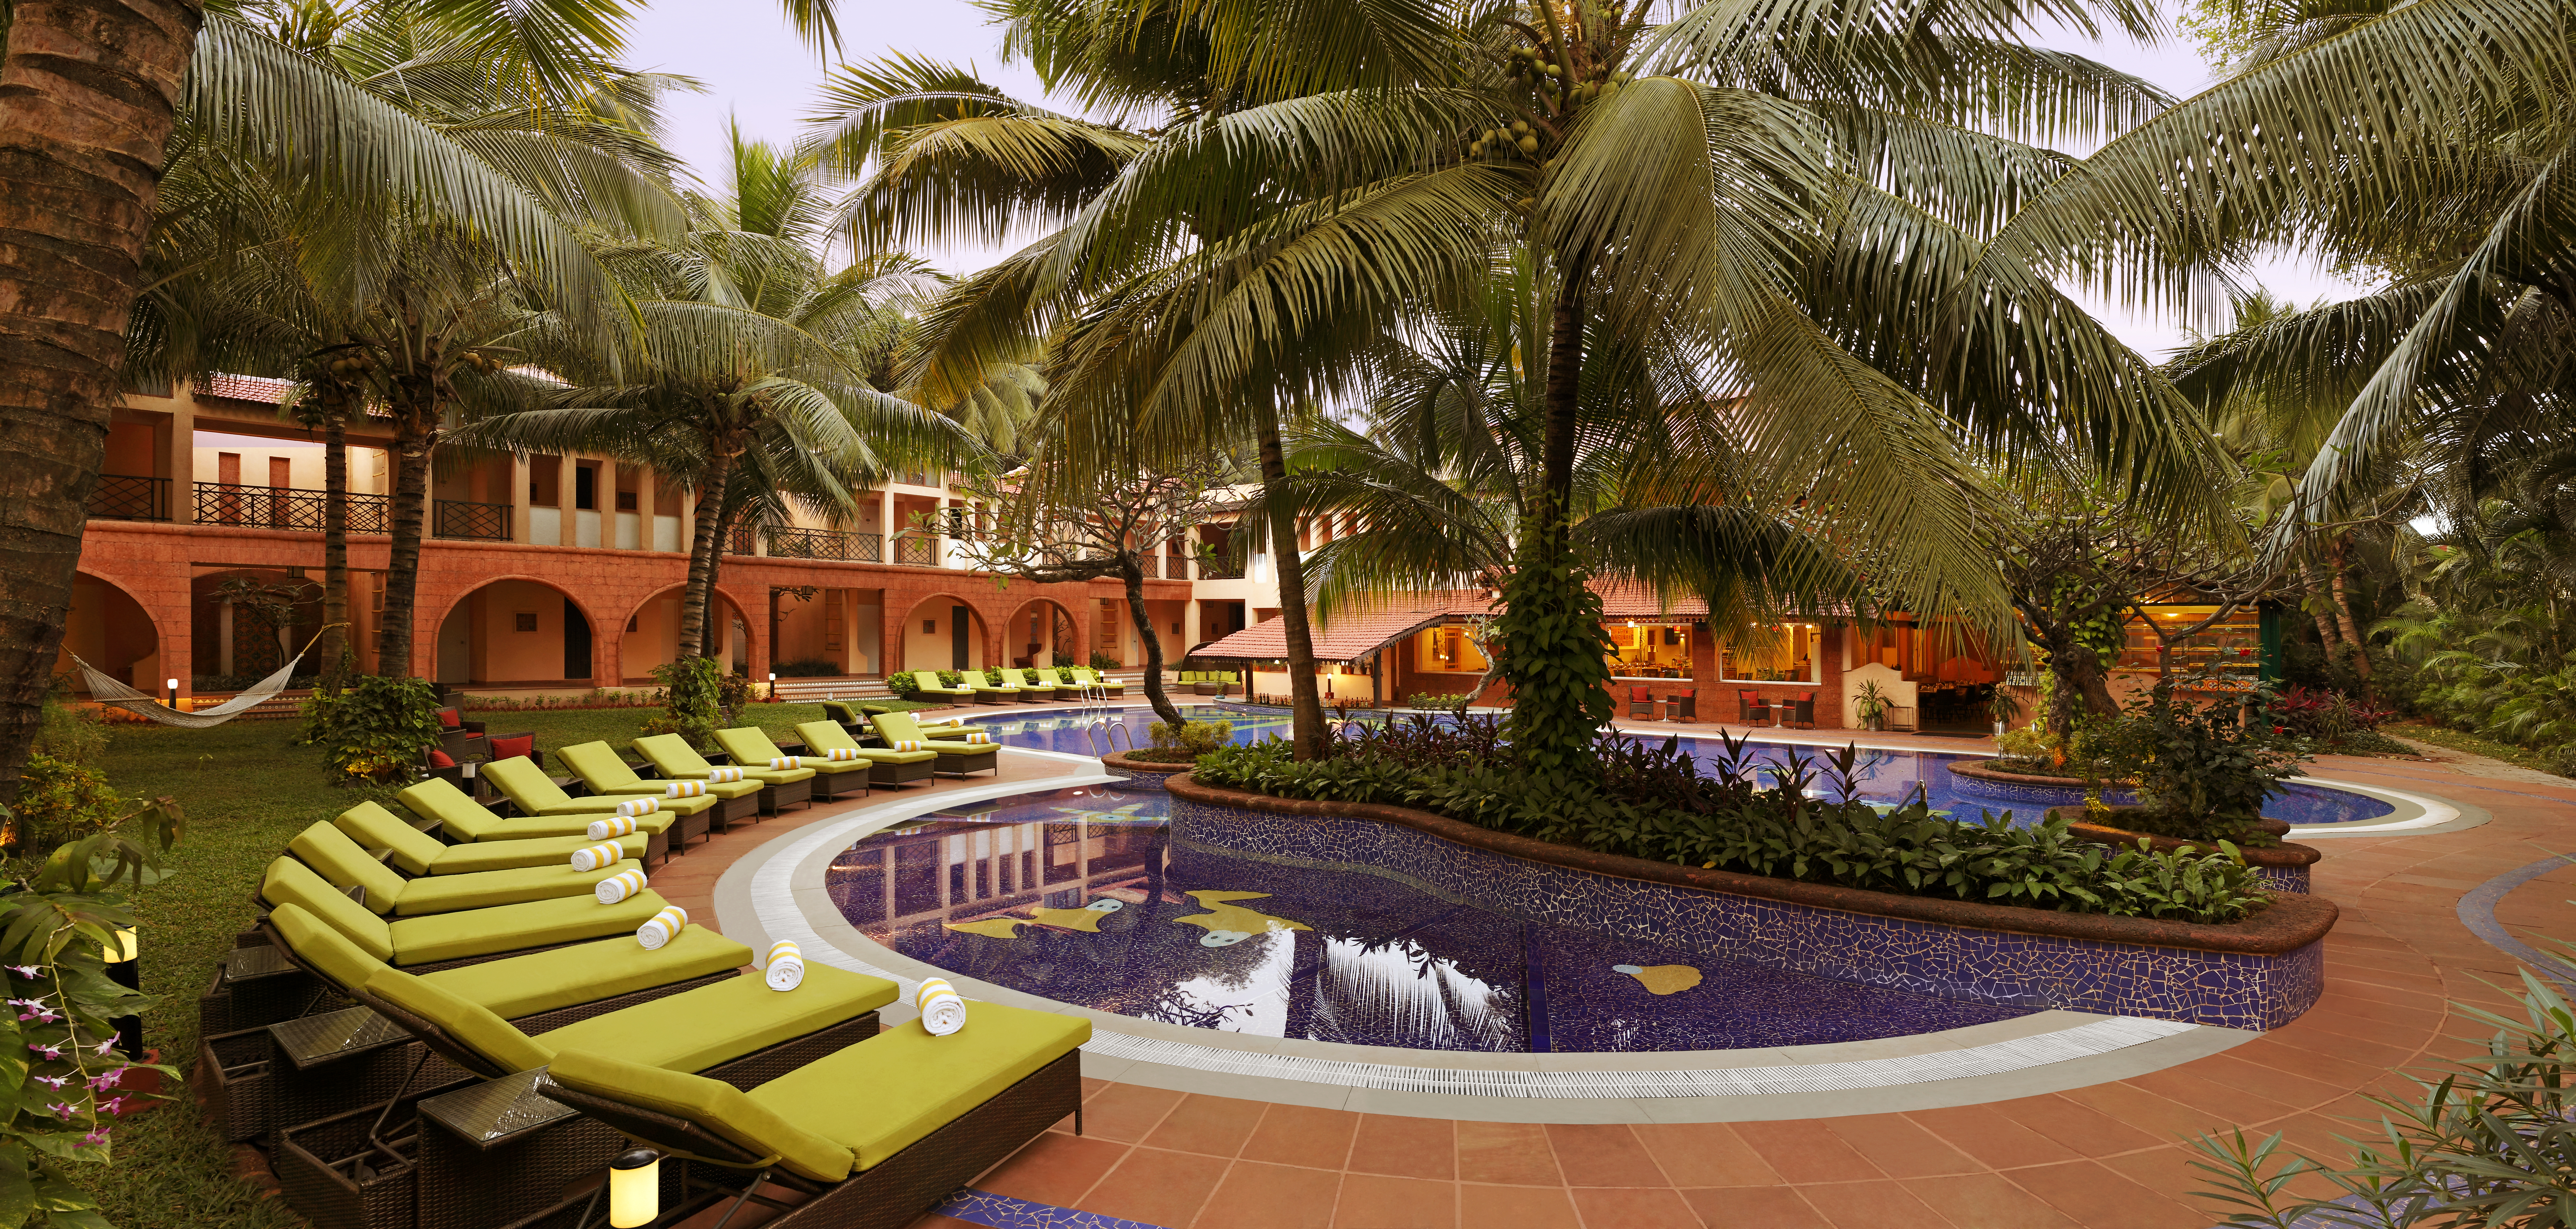 You are currently viewing Lemon tree Amarante Beach Resort, Goa